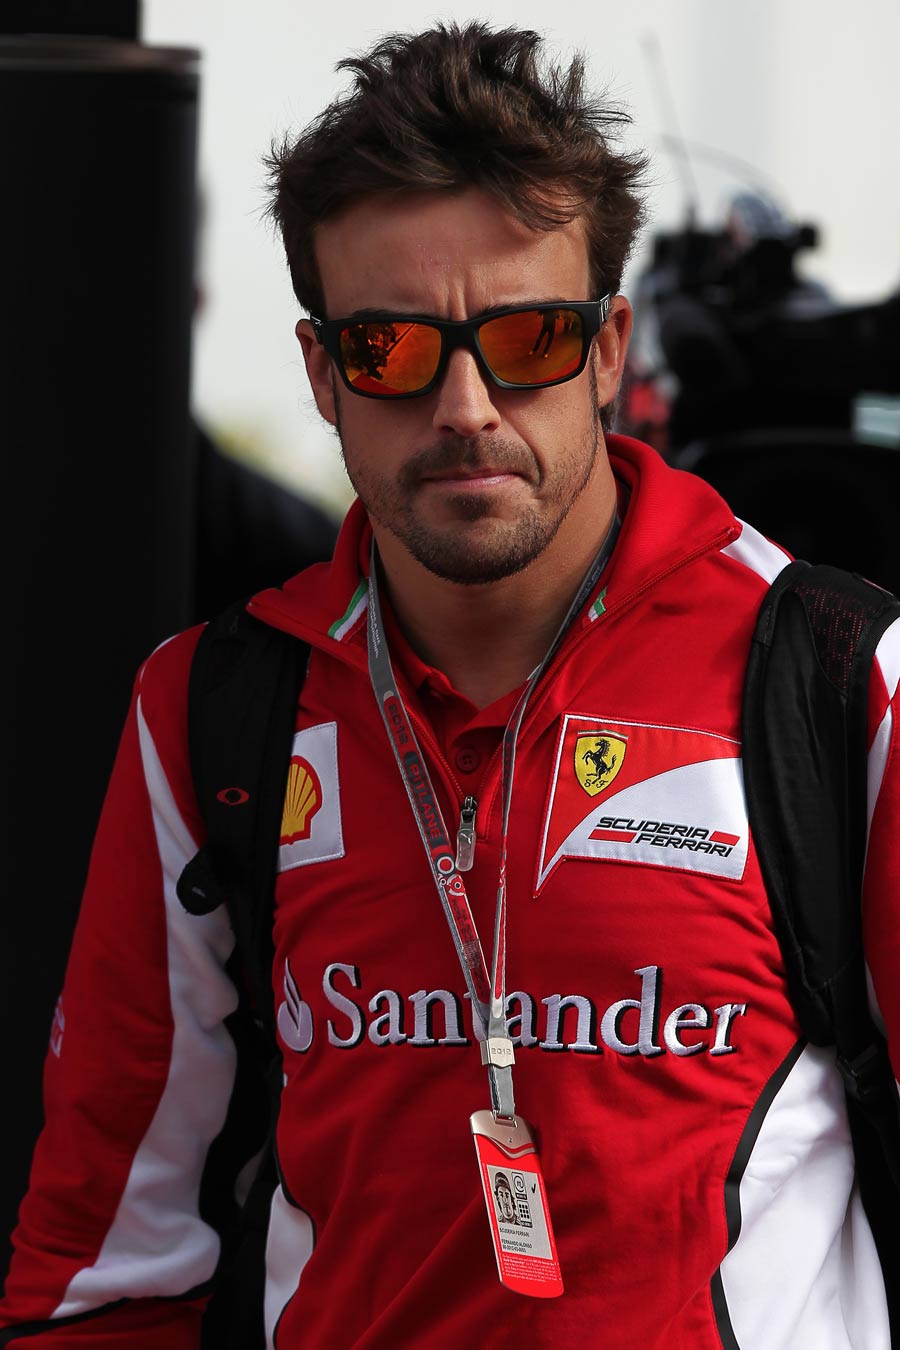 Fernando Alonso walks through the paddock 